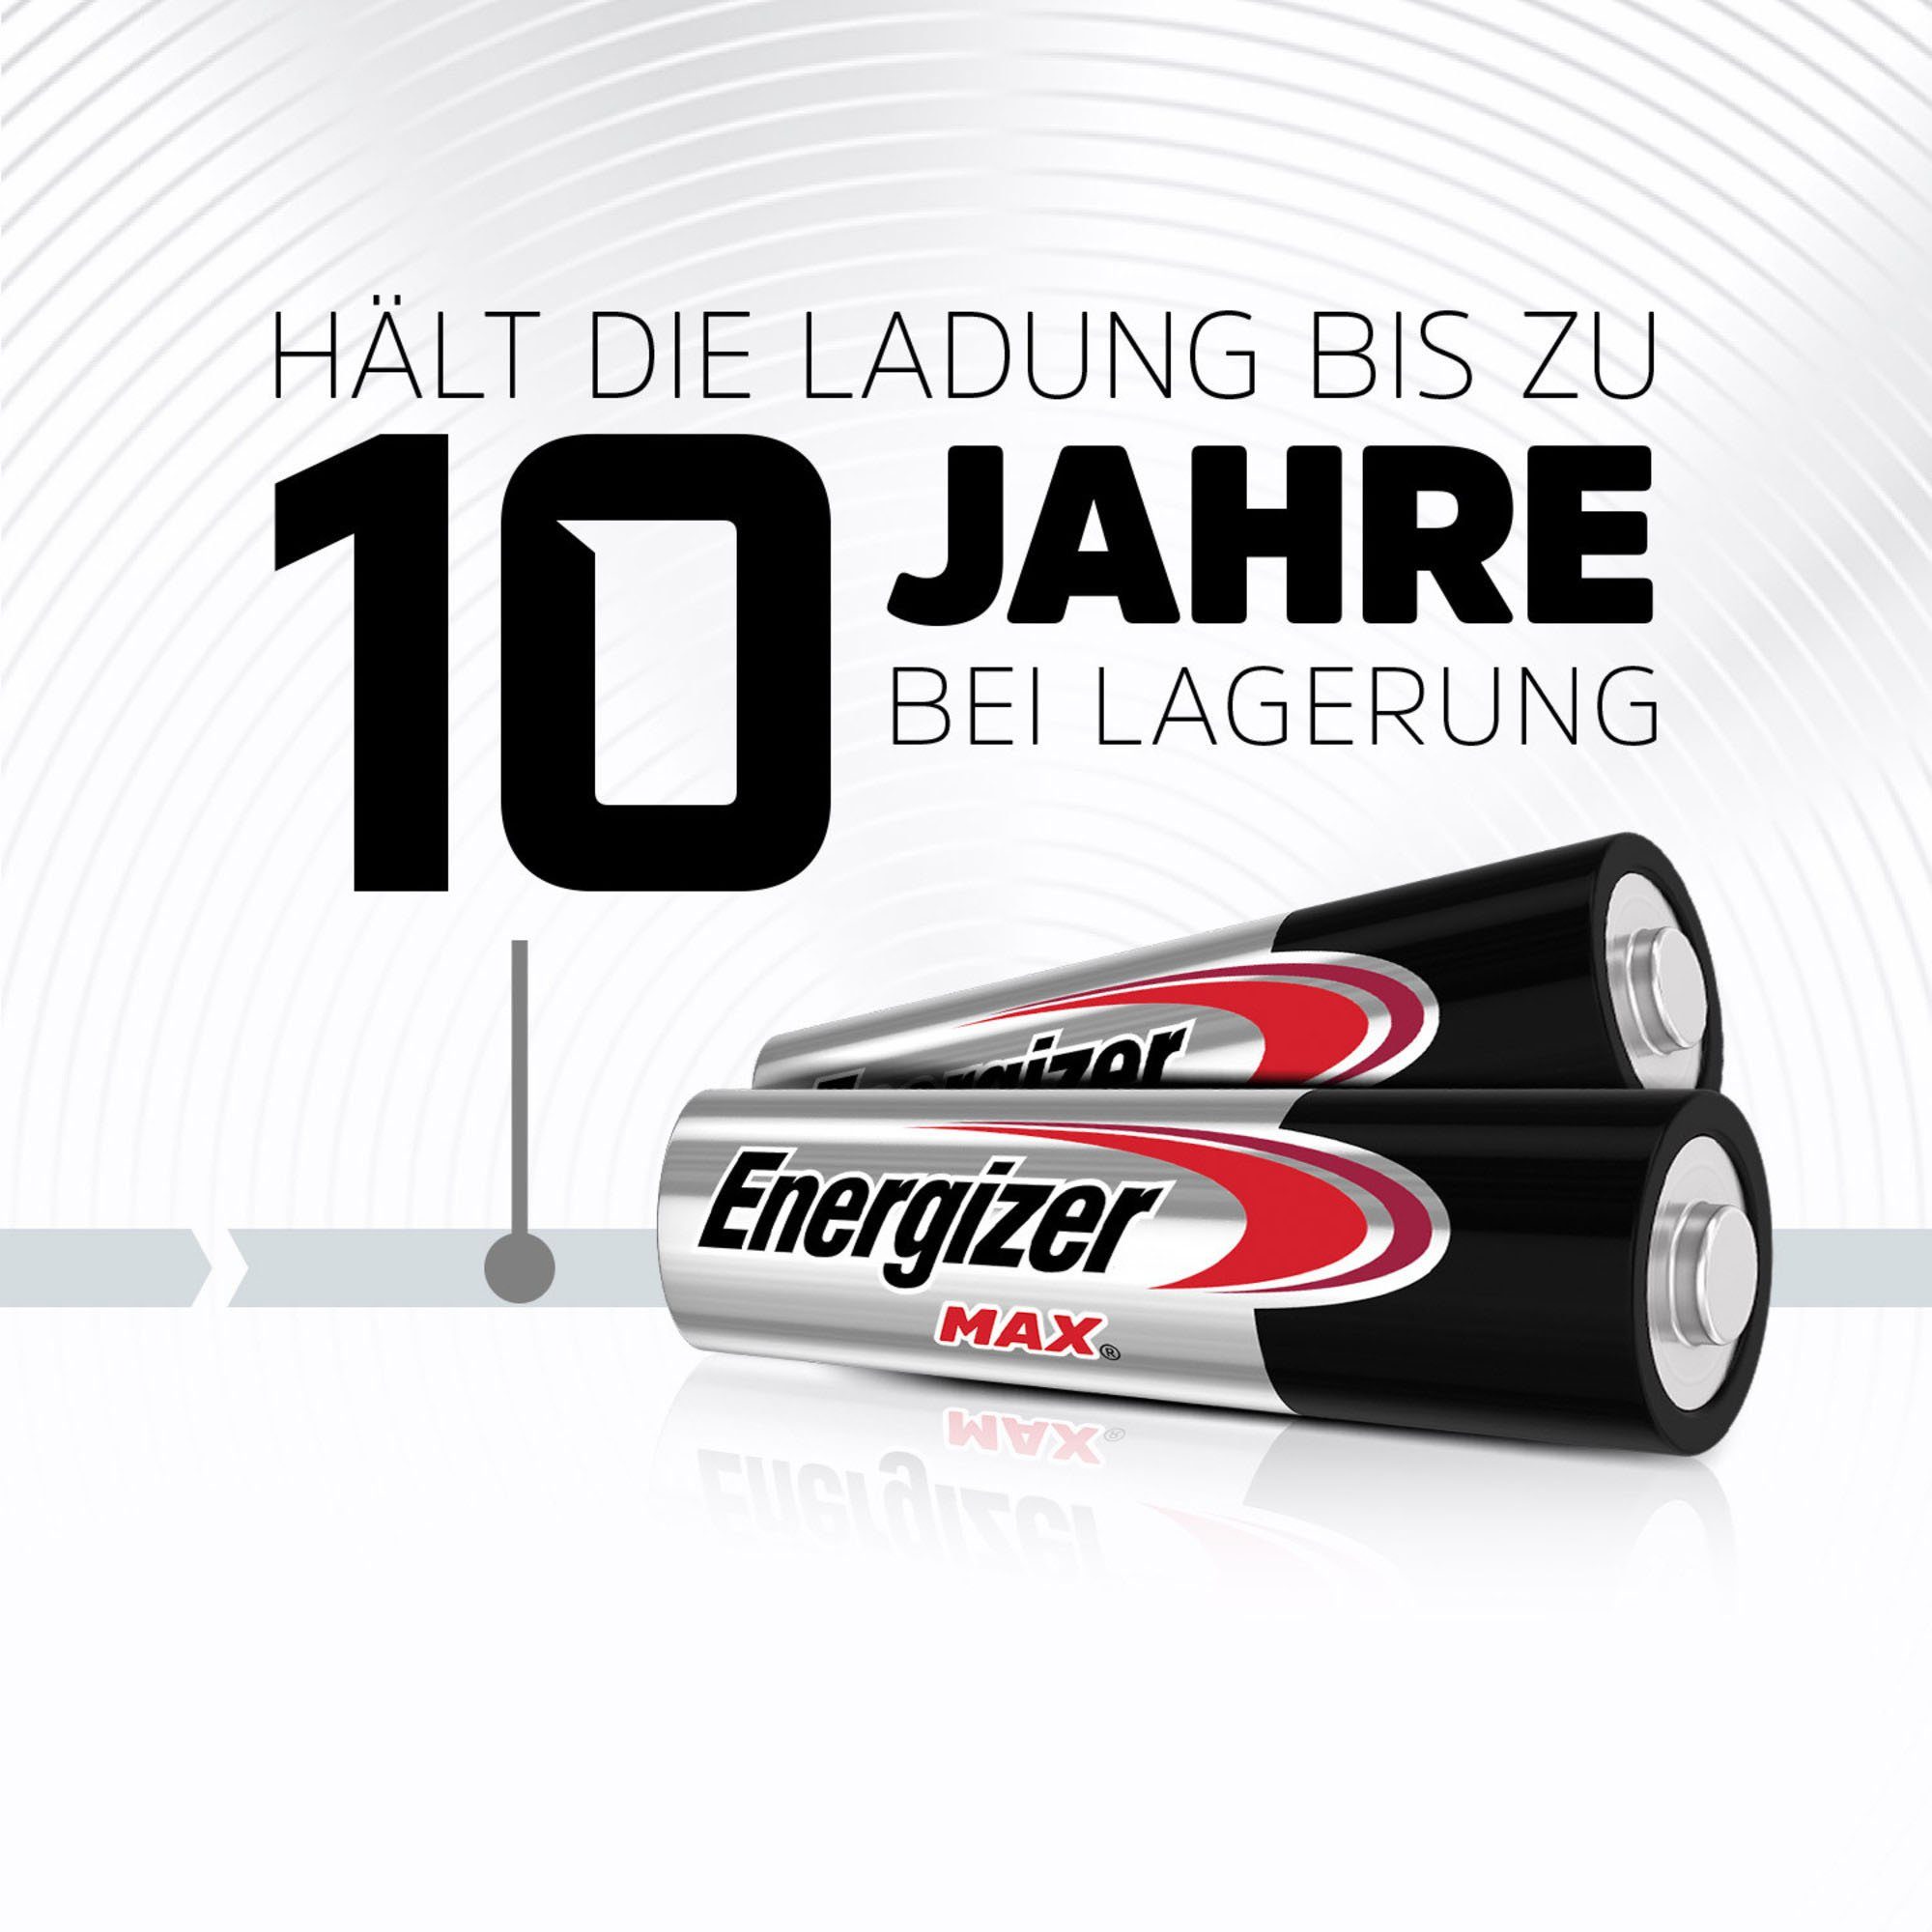 Batterie, St) Max Energizer (AA) Mignon 4er Pack (4